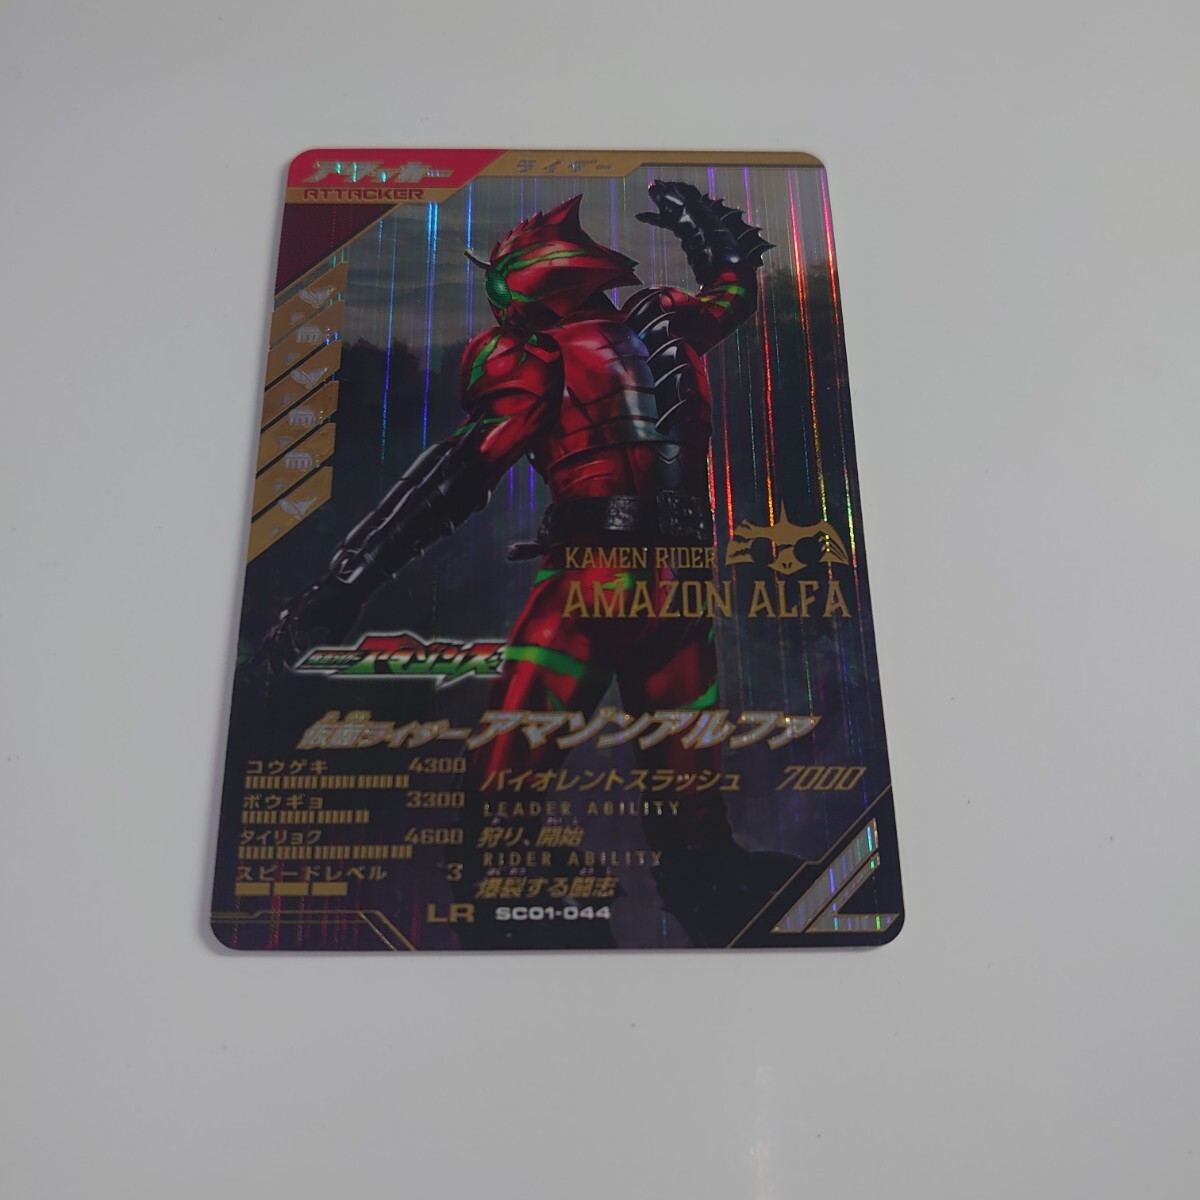  gun barejenzSC1. Kamen Rider Amazon Alpha SC01-044 LR